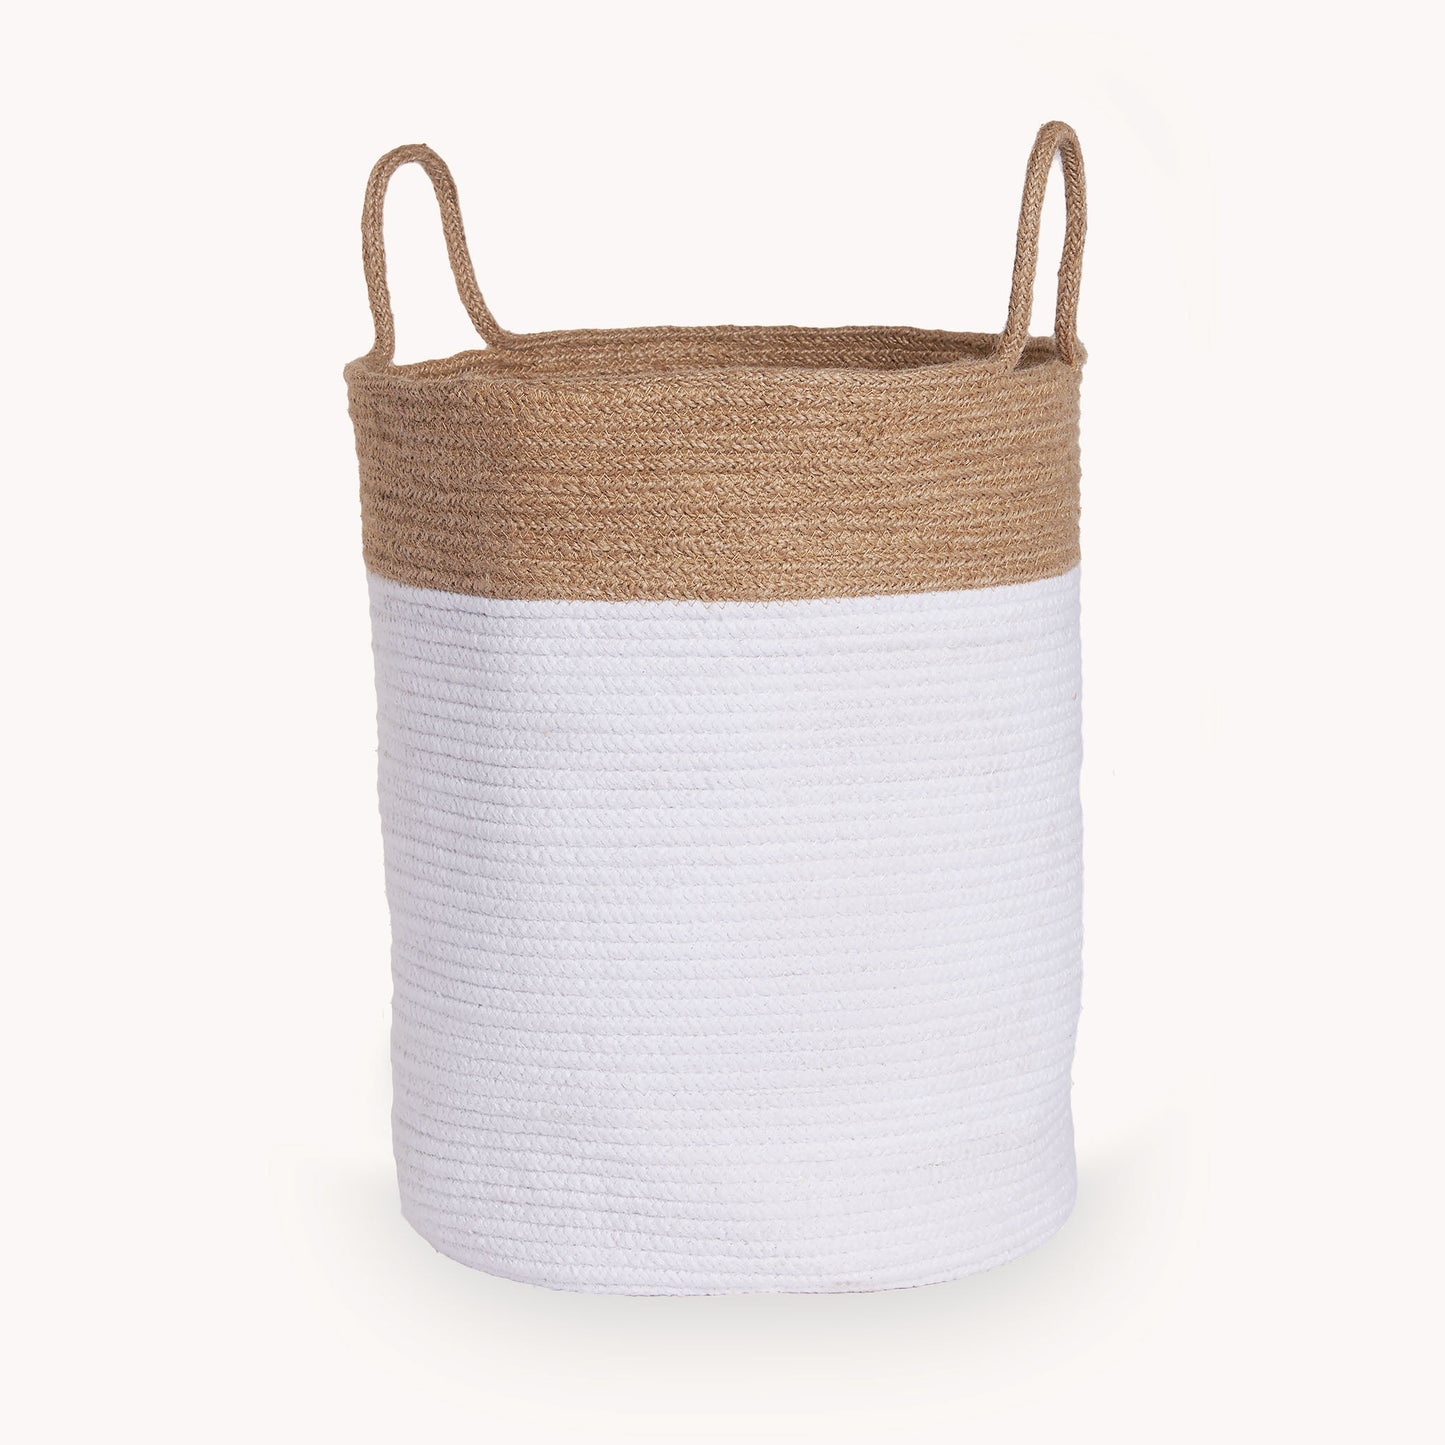 Cotton basket